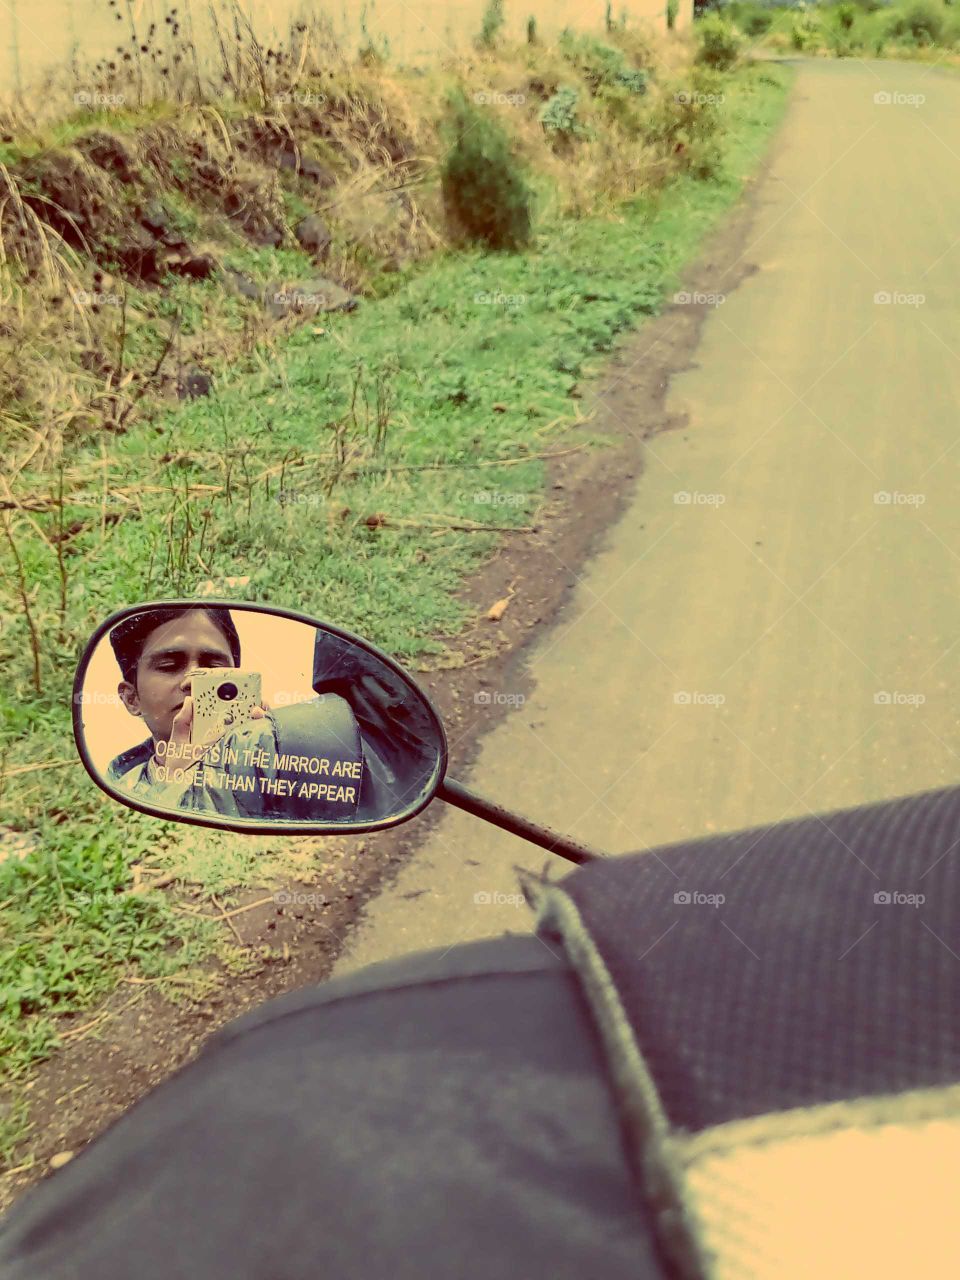 Roadside natural mirror pic.